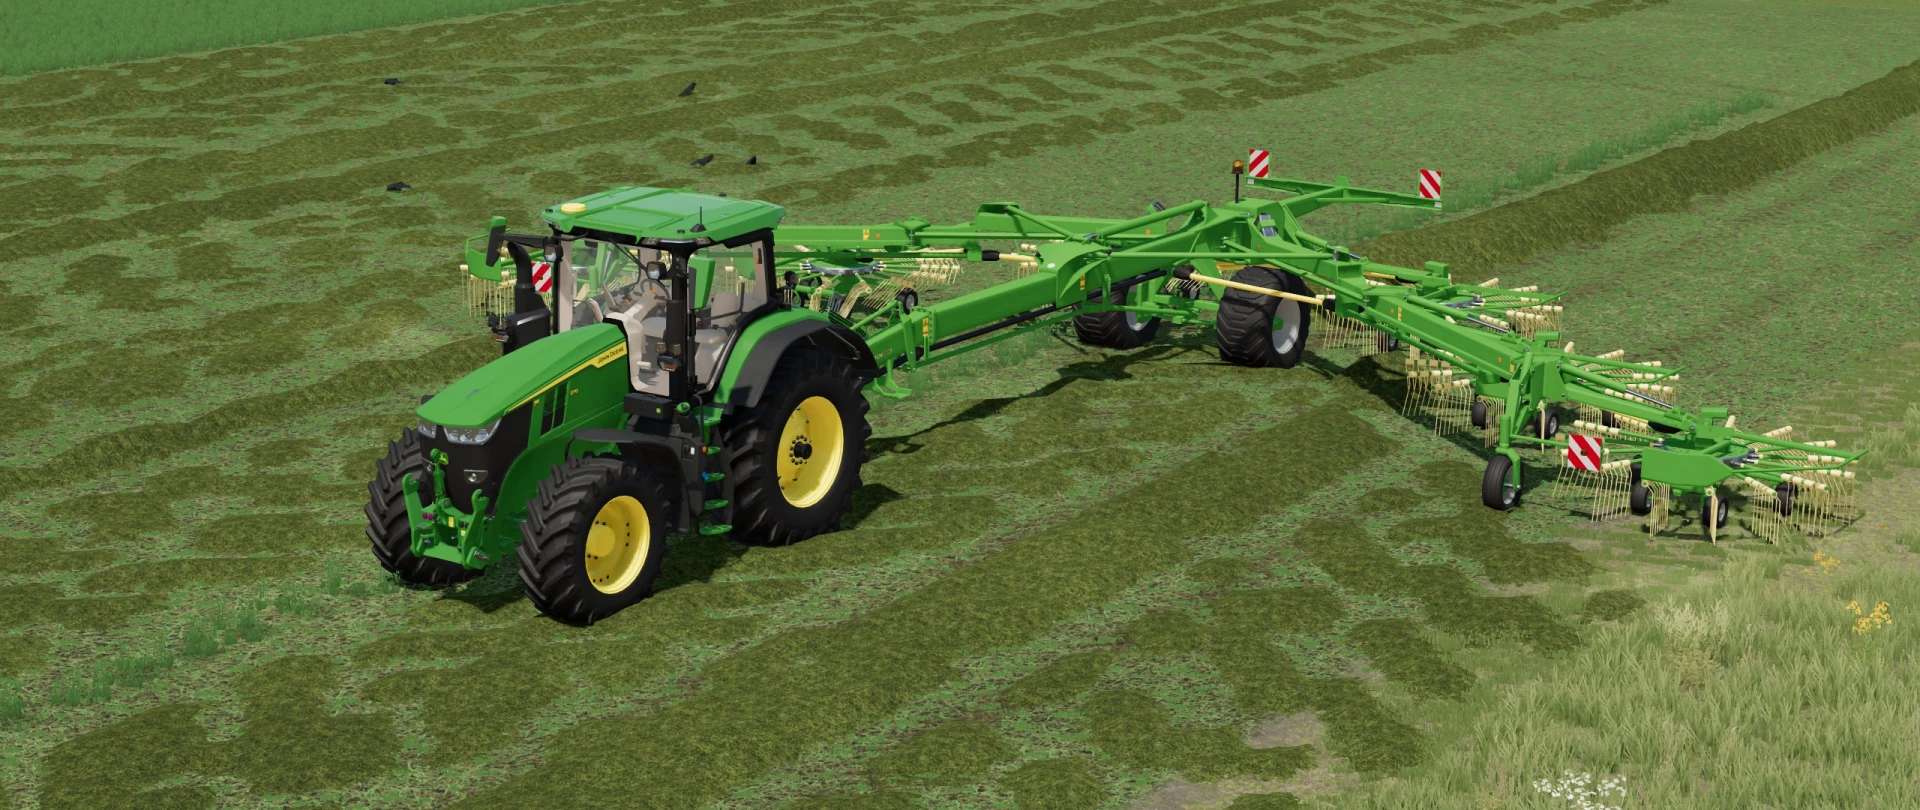 Krone Swadro 2000 V10 Fs22 Mod Farming Simulator 22 Mod Images And Photos Finder 9663